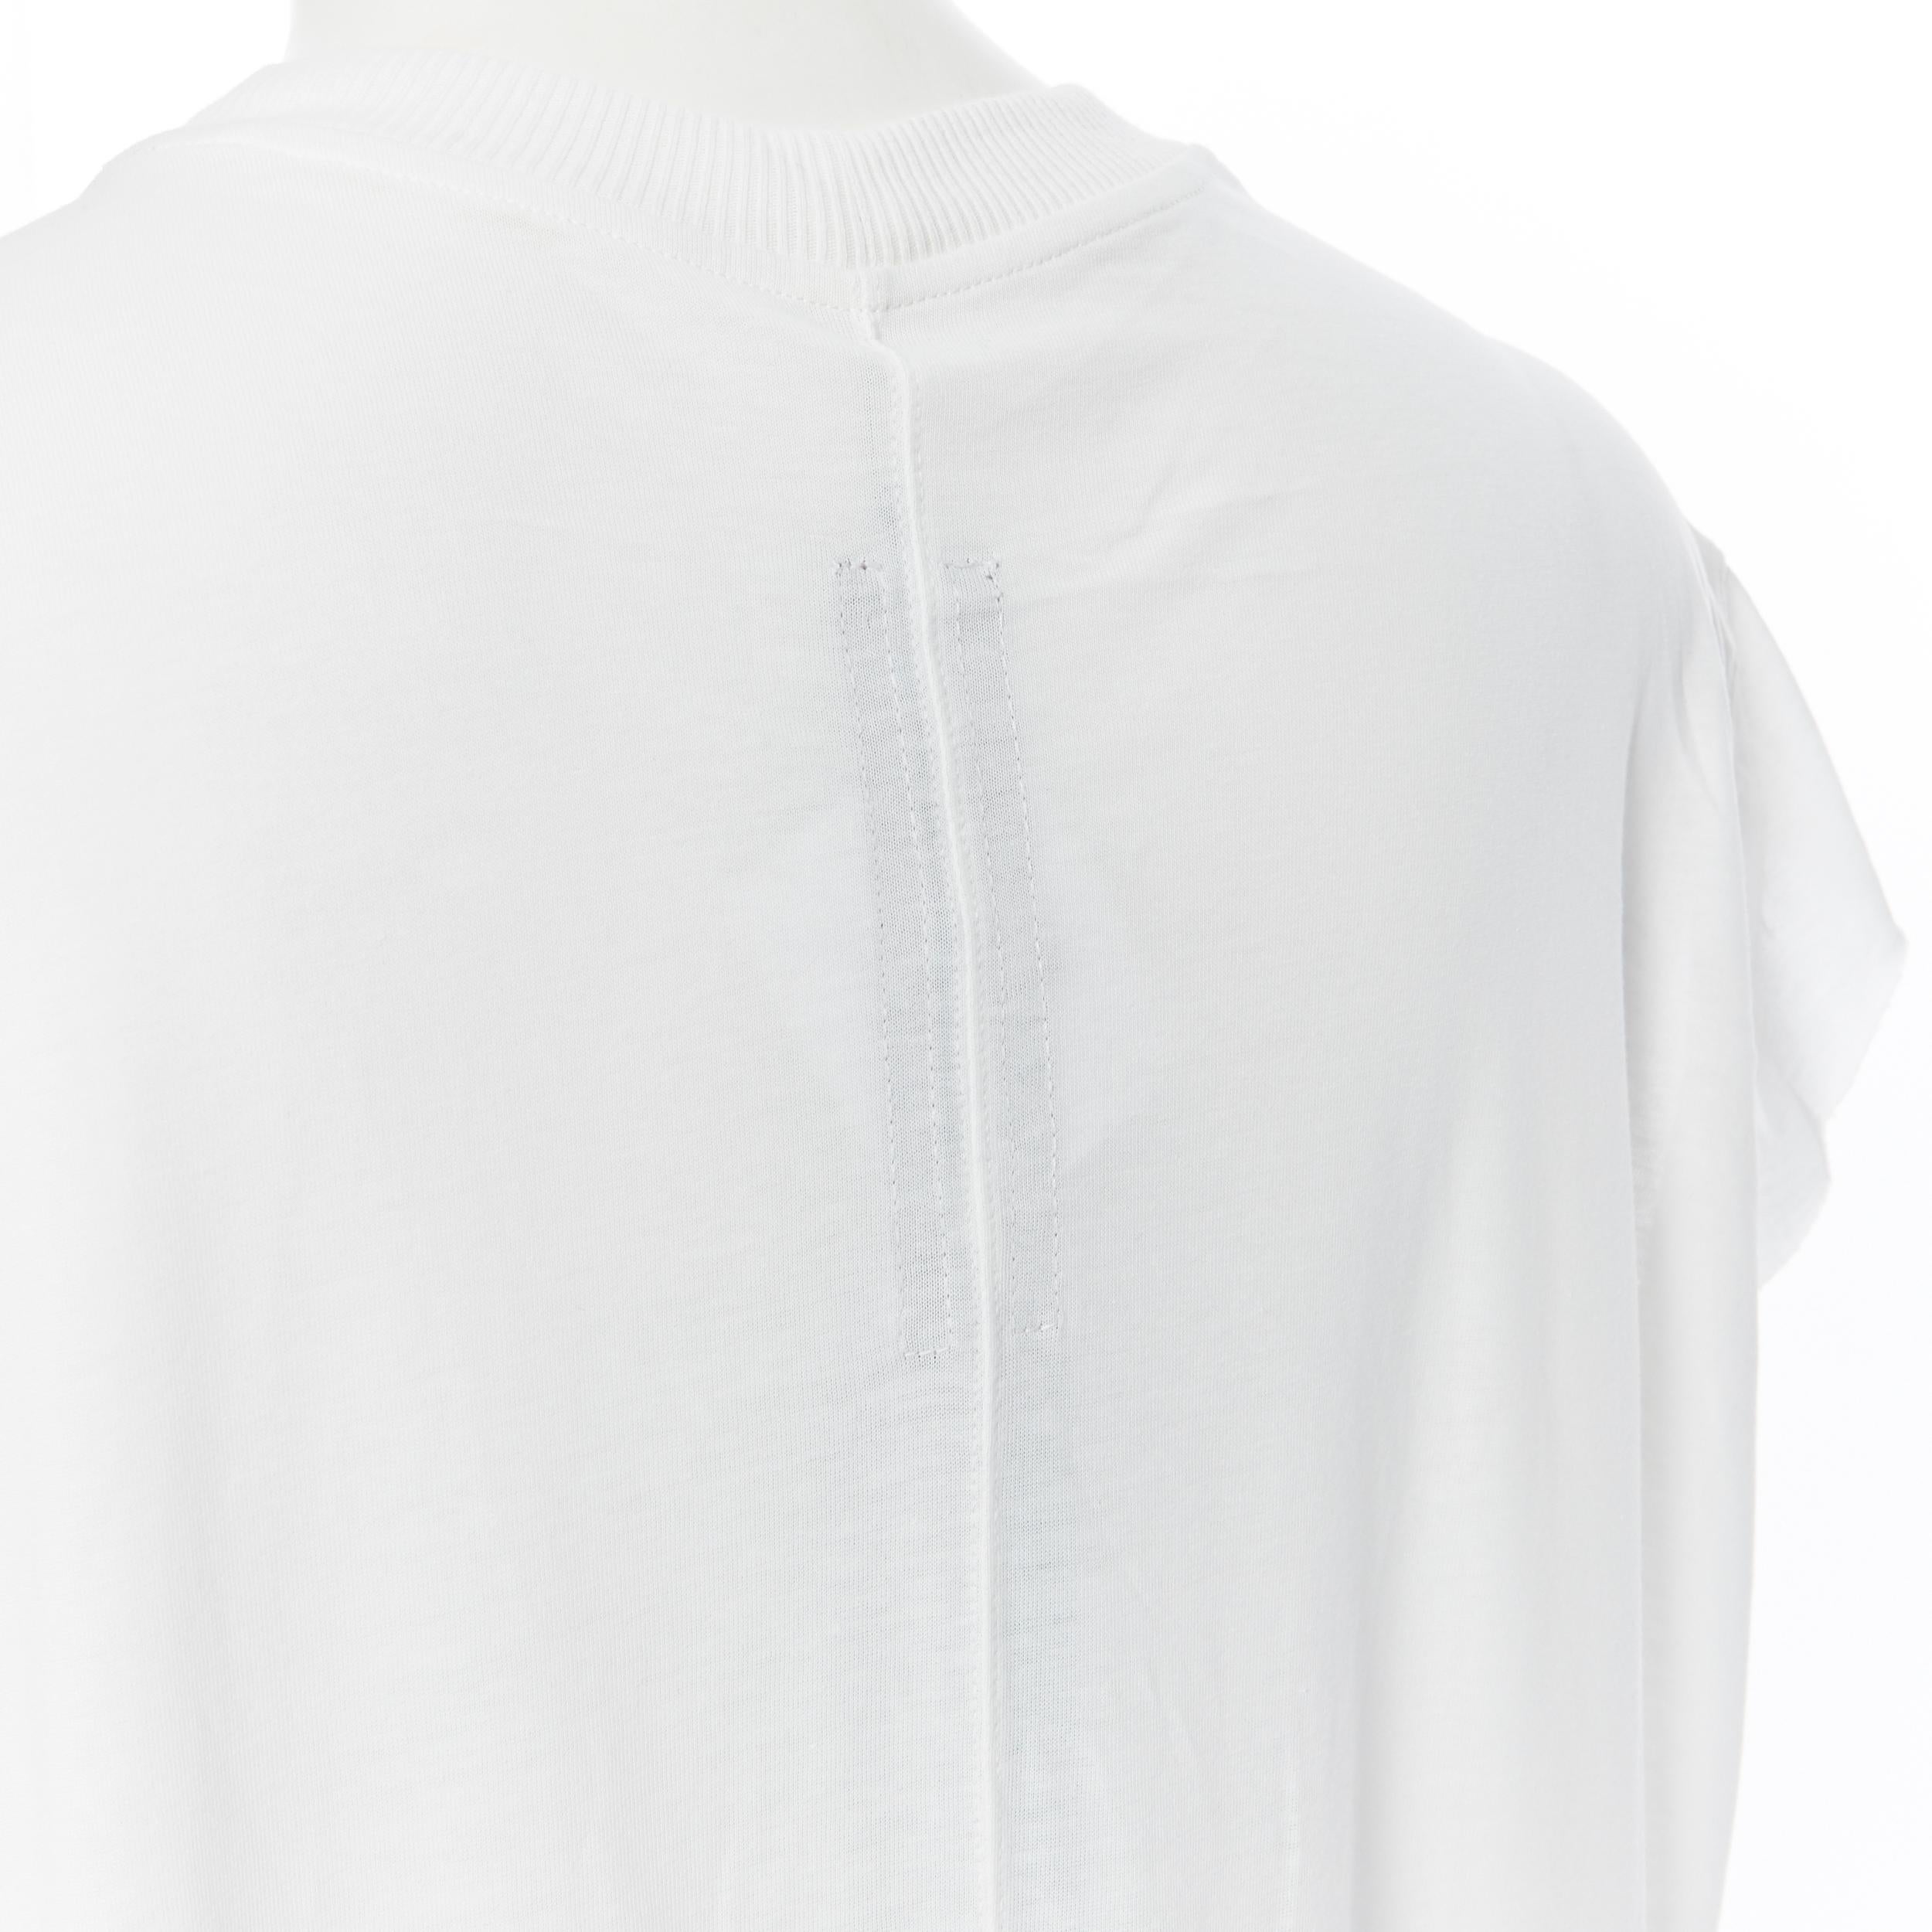 new RICK OWENS DRKSHDW SS18 Dirt Jumbo white black photo print t-shirt dress OS 1